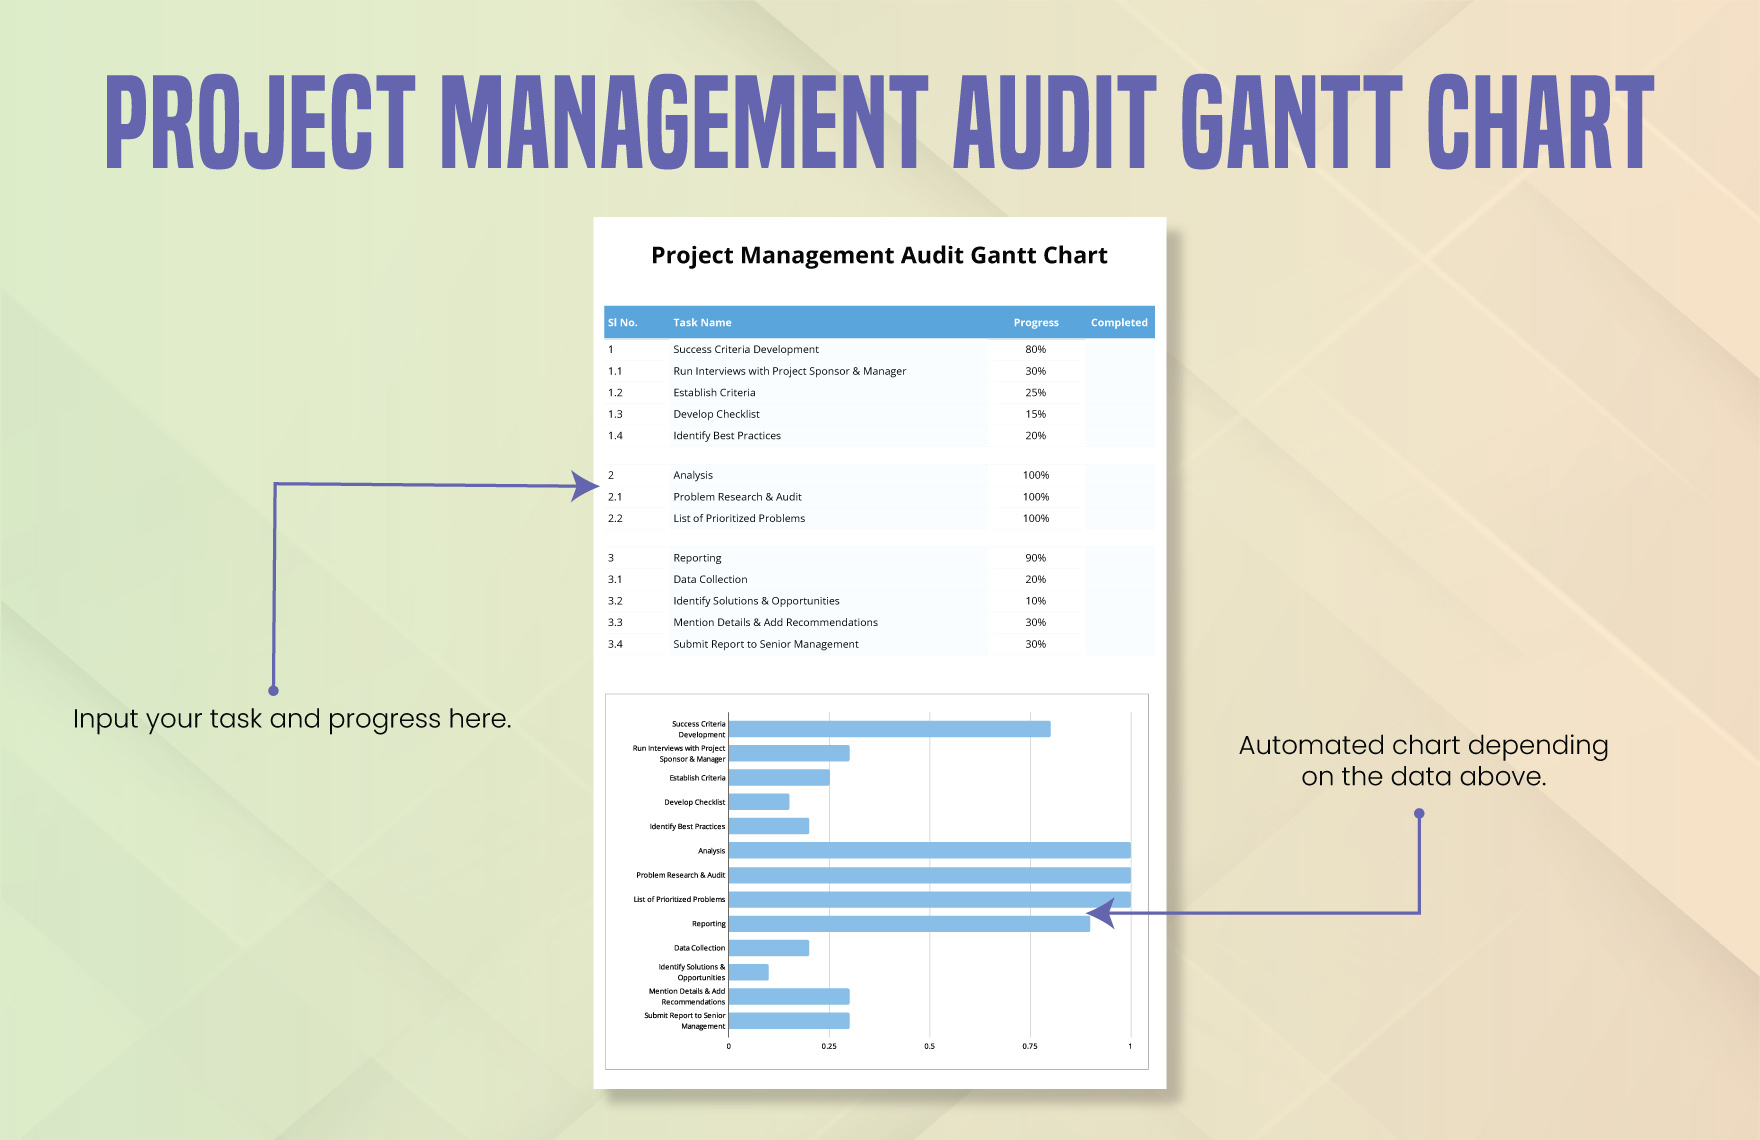 Project Management Audit Gantt Chart Template